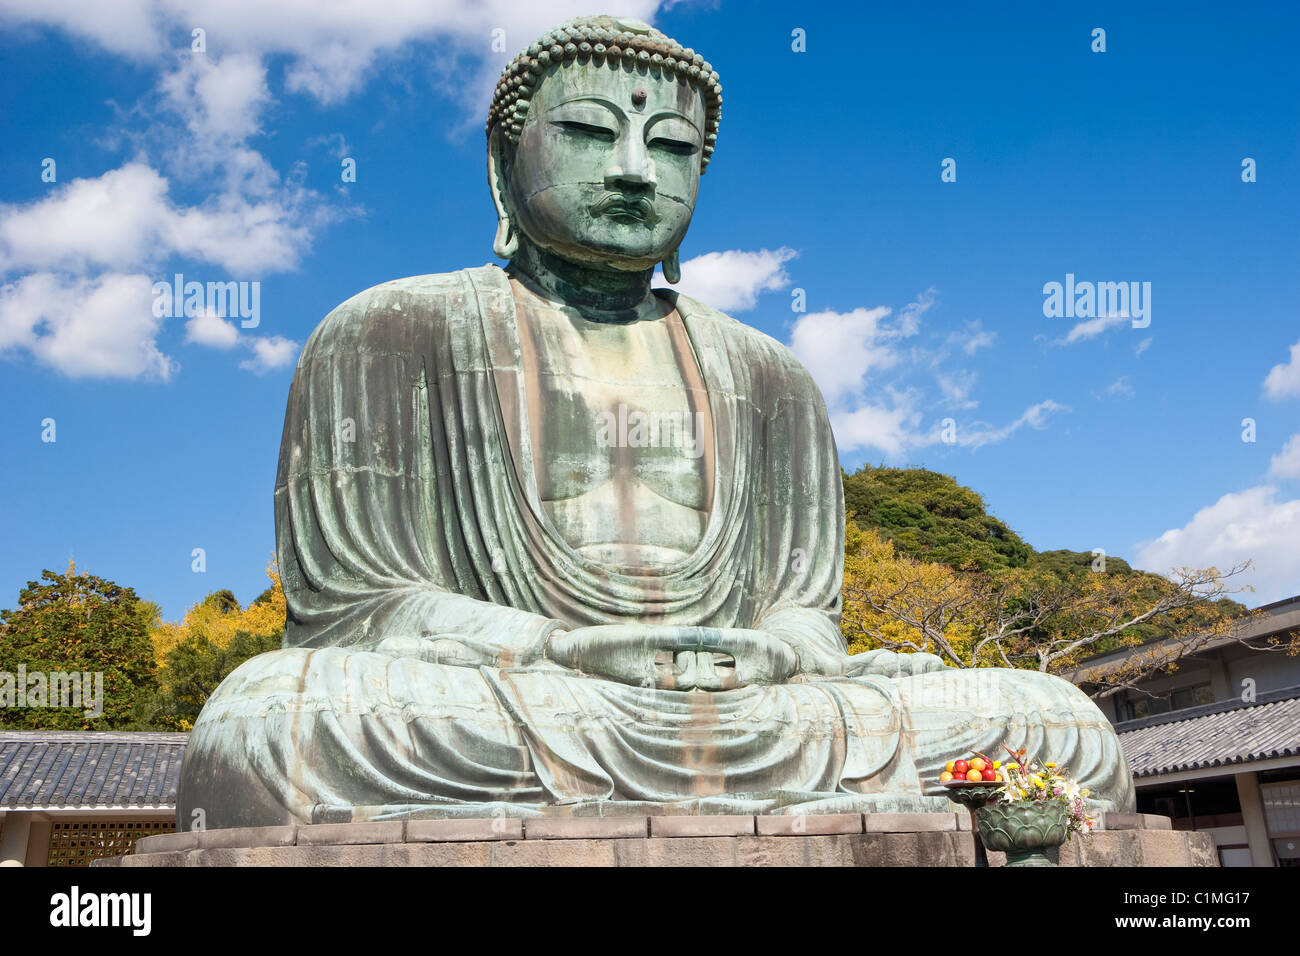 Daibutsu (Great Buddha) of Kamakura, Japan Stock Photo